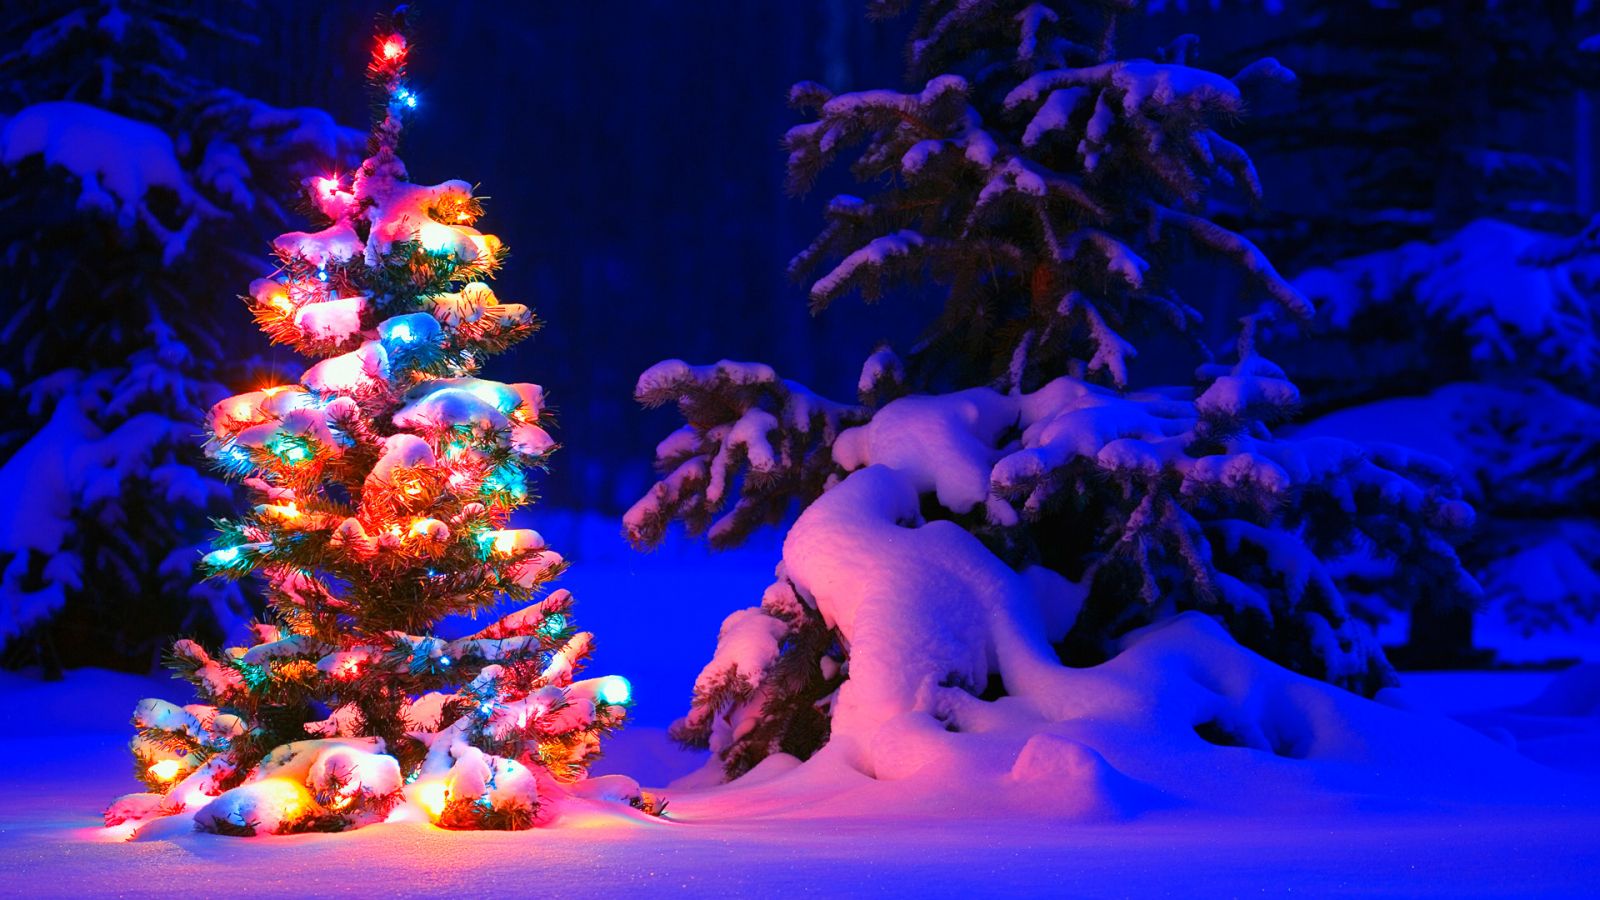 Snowy Christmas Tree Lights wallpaper in 1600x900 resolution